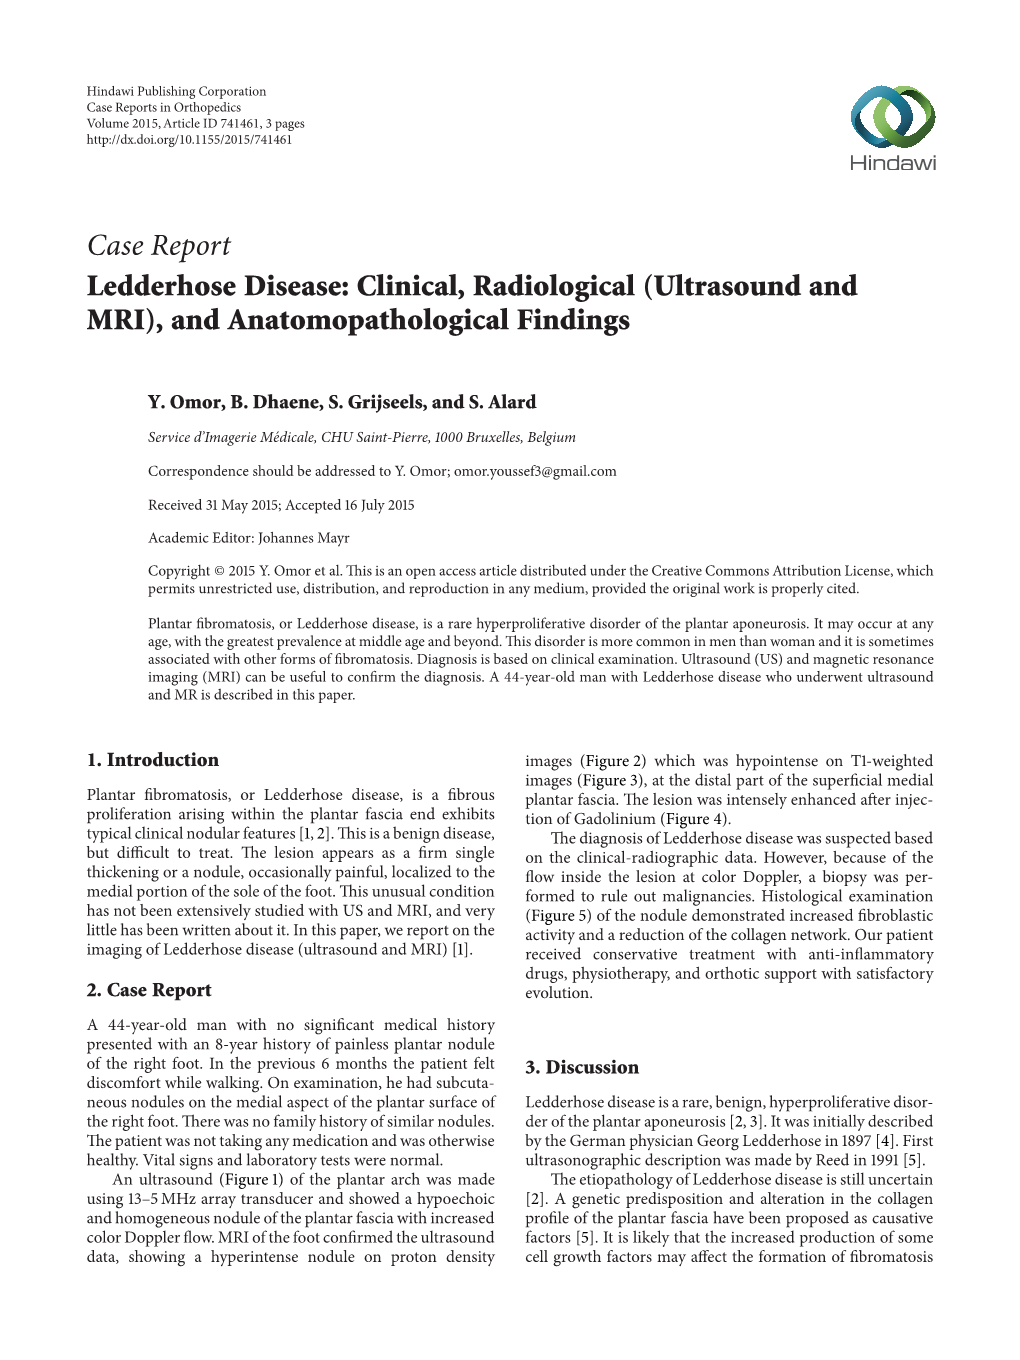 Ledderhose Disease: Clinical, Radiological (Ultrasound and MRI), and Anatomopathological Findings